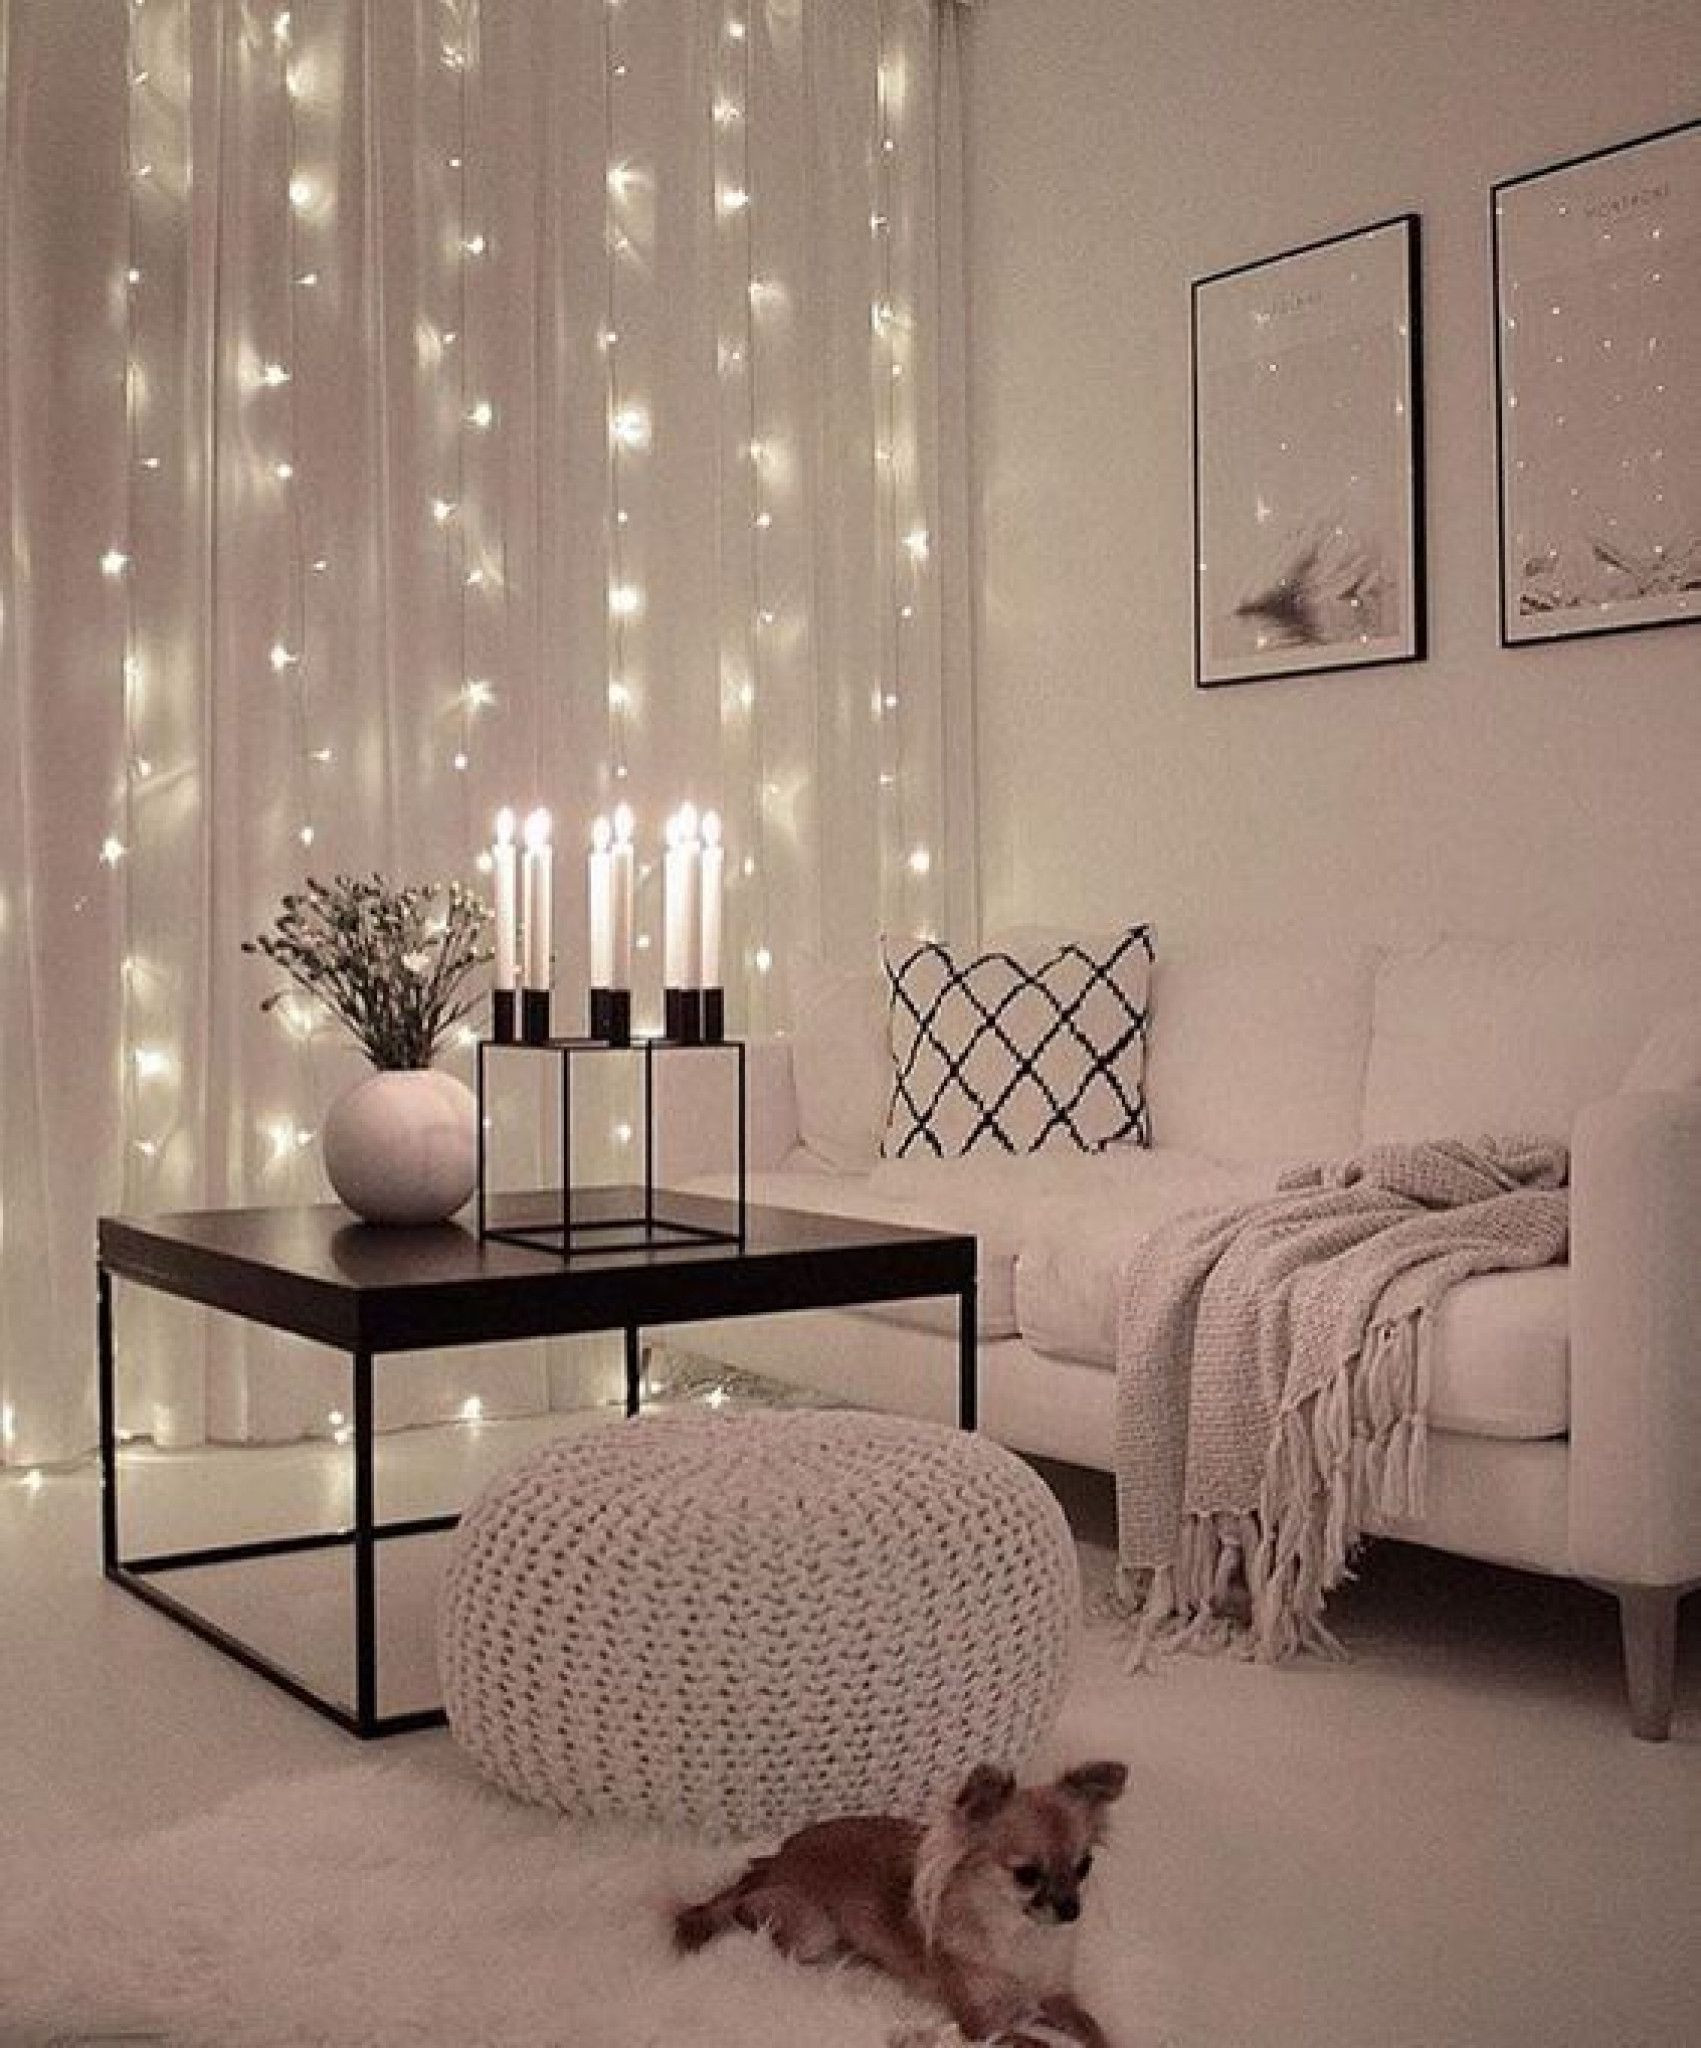 DIY Living Room Decor Pinterest
 Home Decor Pinterest Best 25 Living Room Decorations Ideas